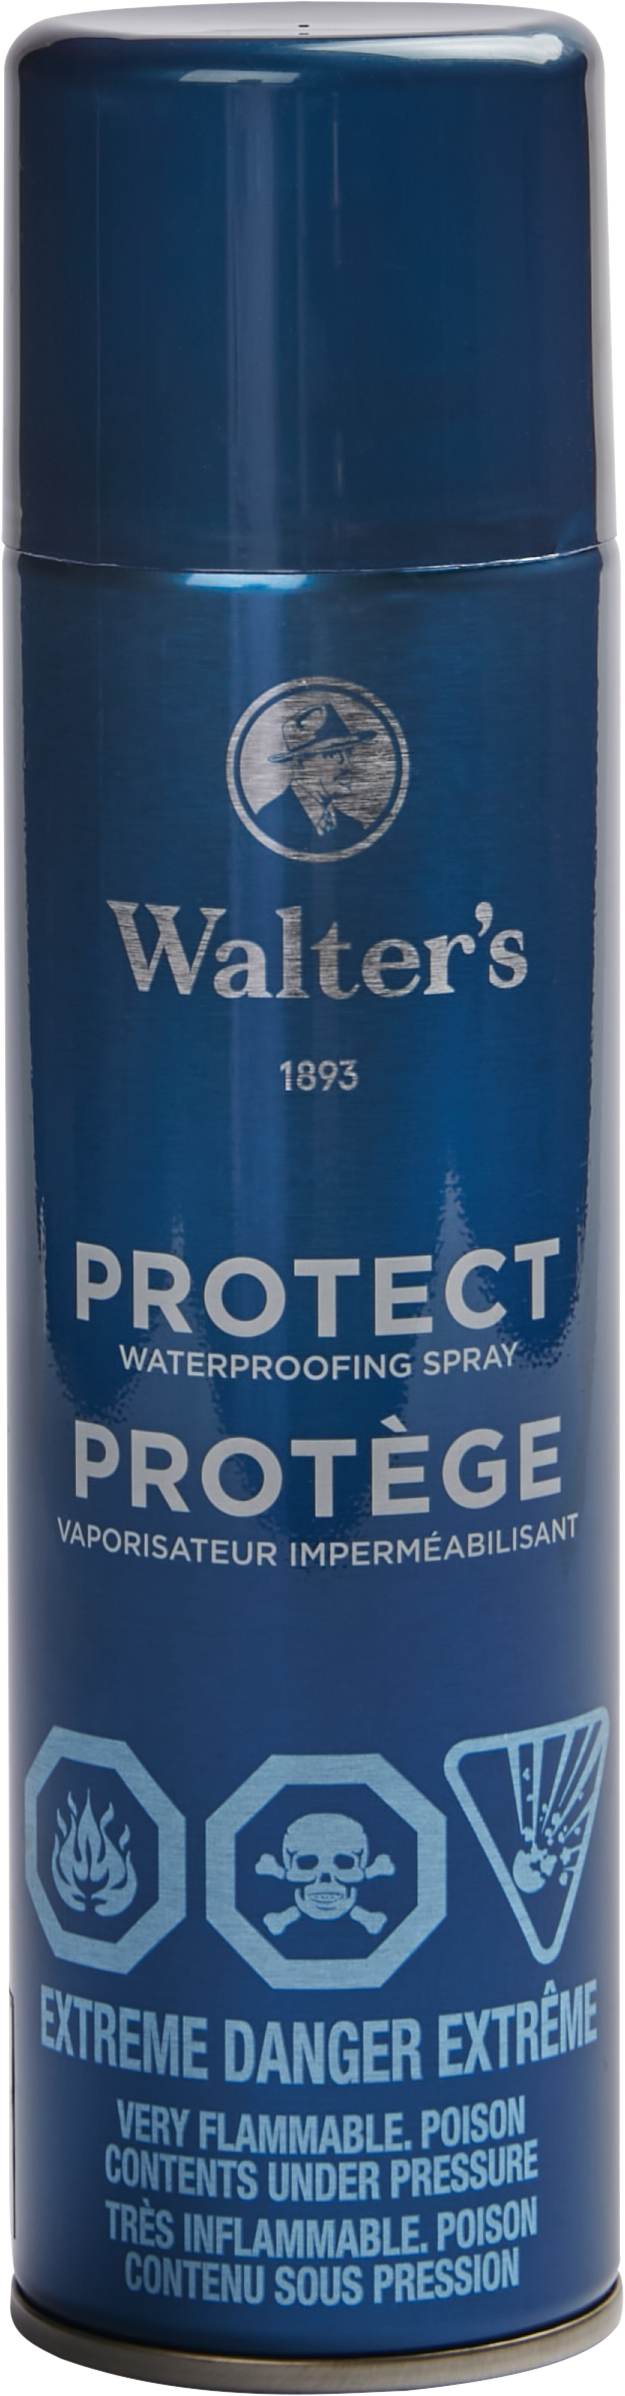 Protect Waterproof Spray